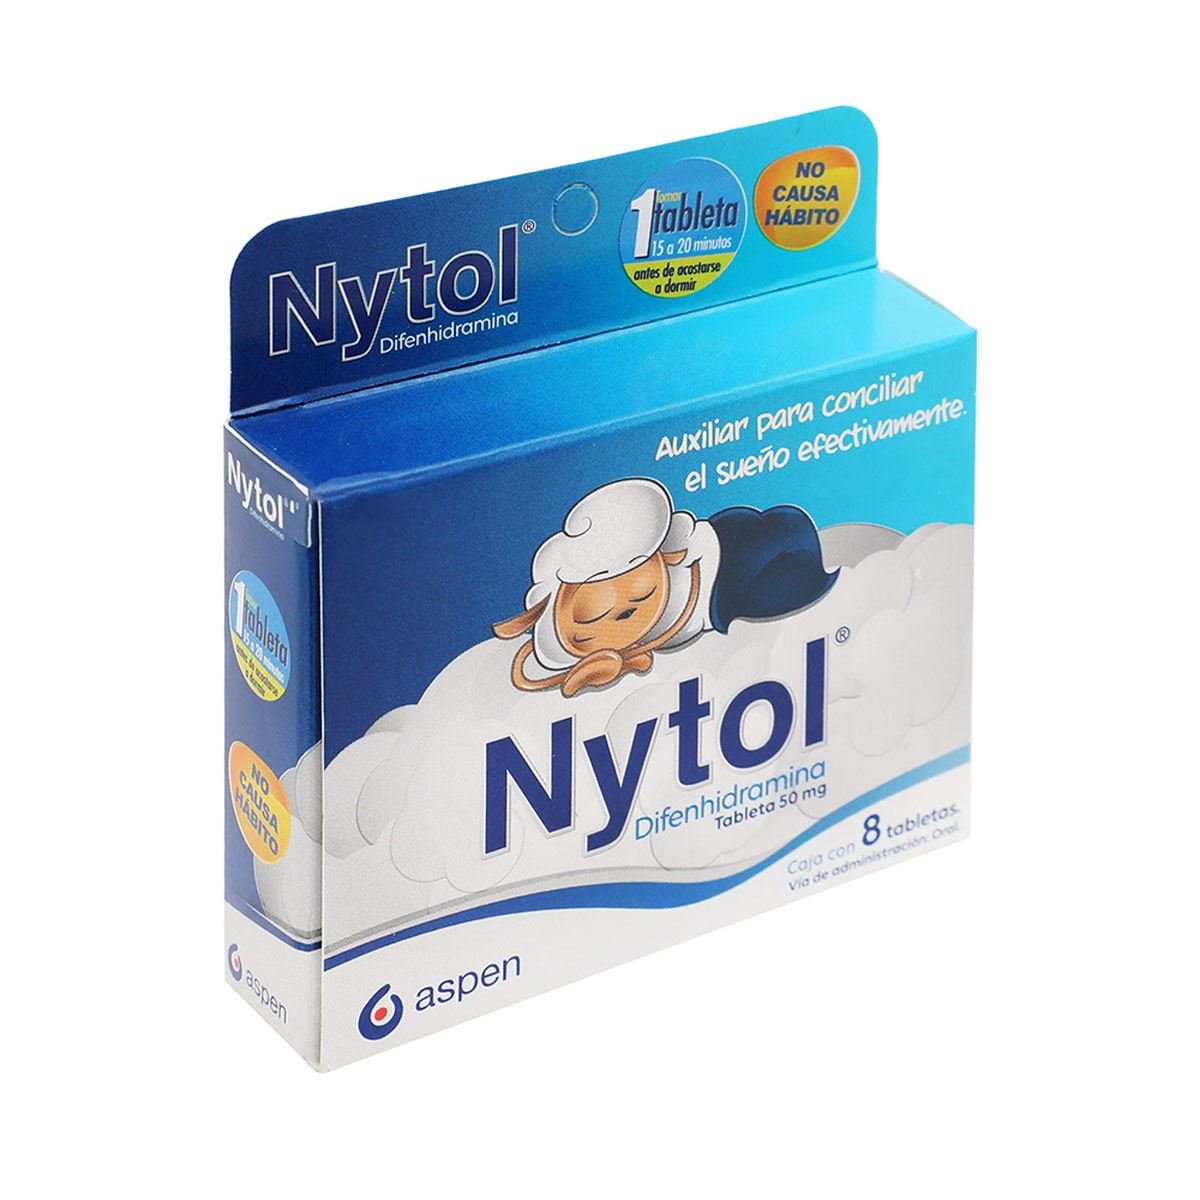 Nytol Difenhidramina 50mg 8 Tabletas